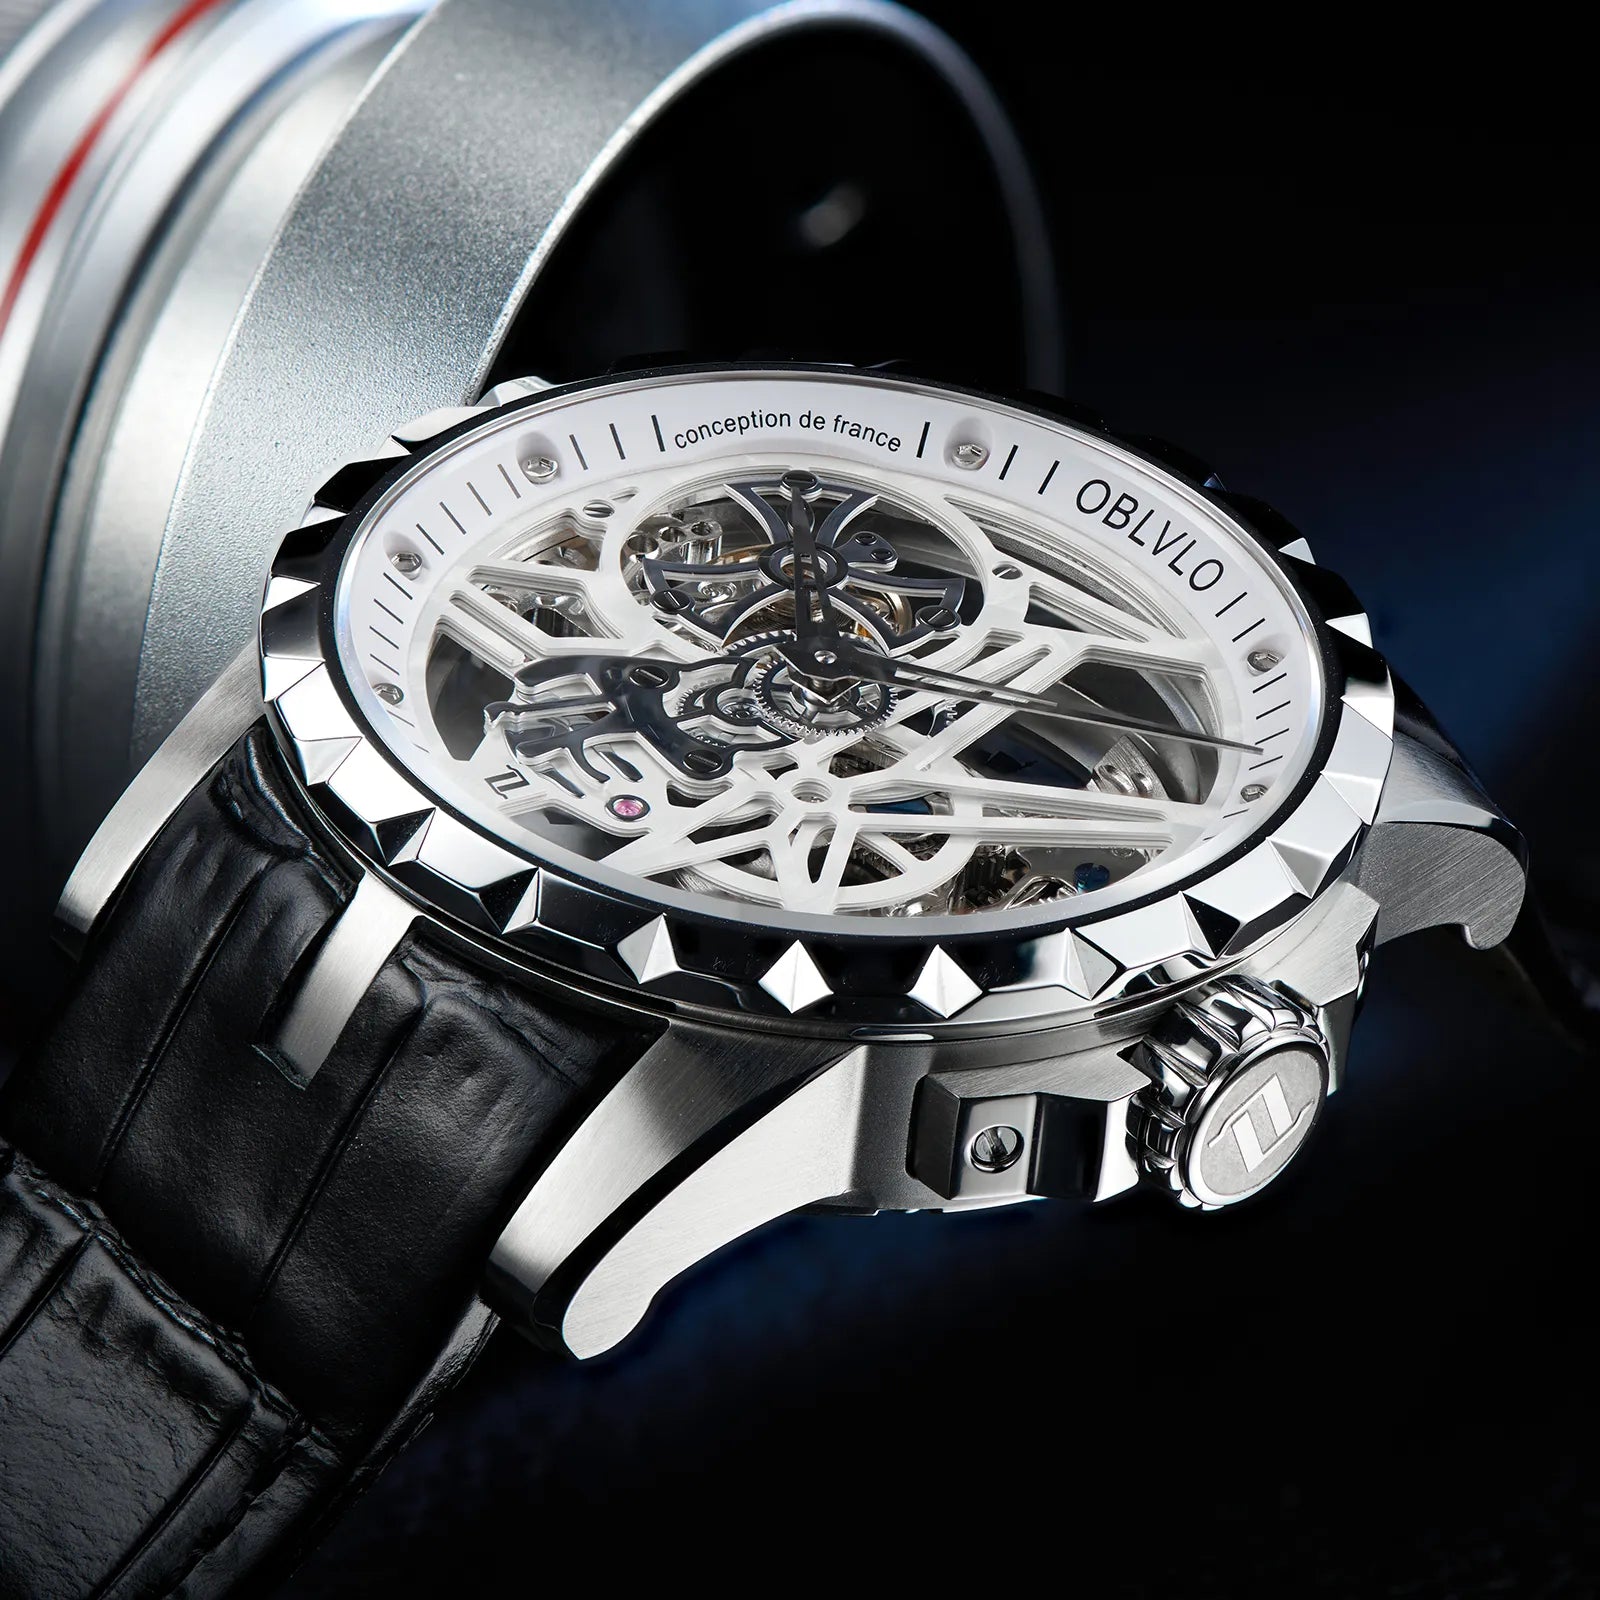 OBLVLO Luxury Sport Men Skeleton Automatical Watch Mechanical Calfskin Strap Pin Buckle Sapphire Waterproof Clock Dial 46mm RM-S